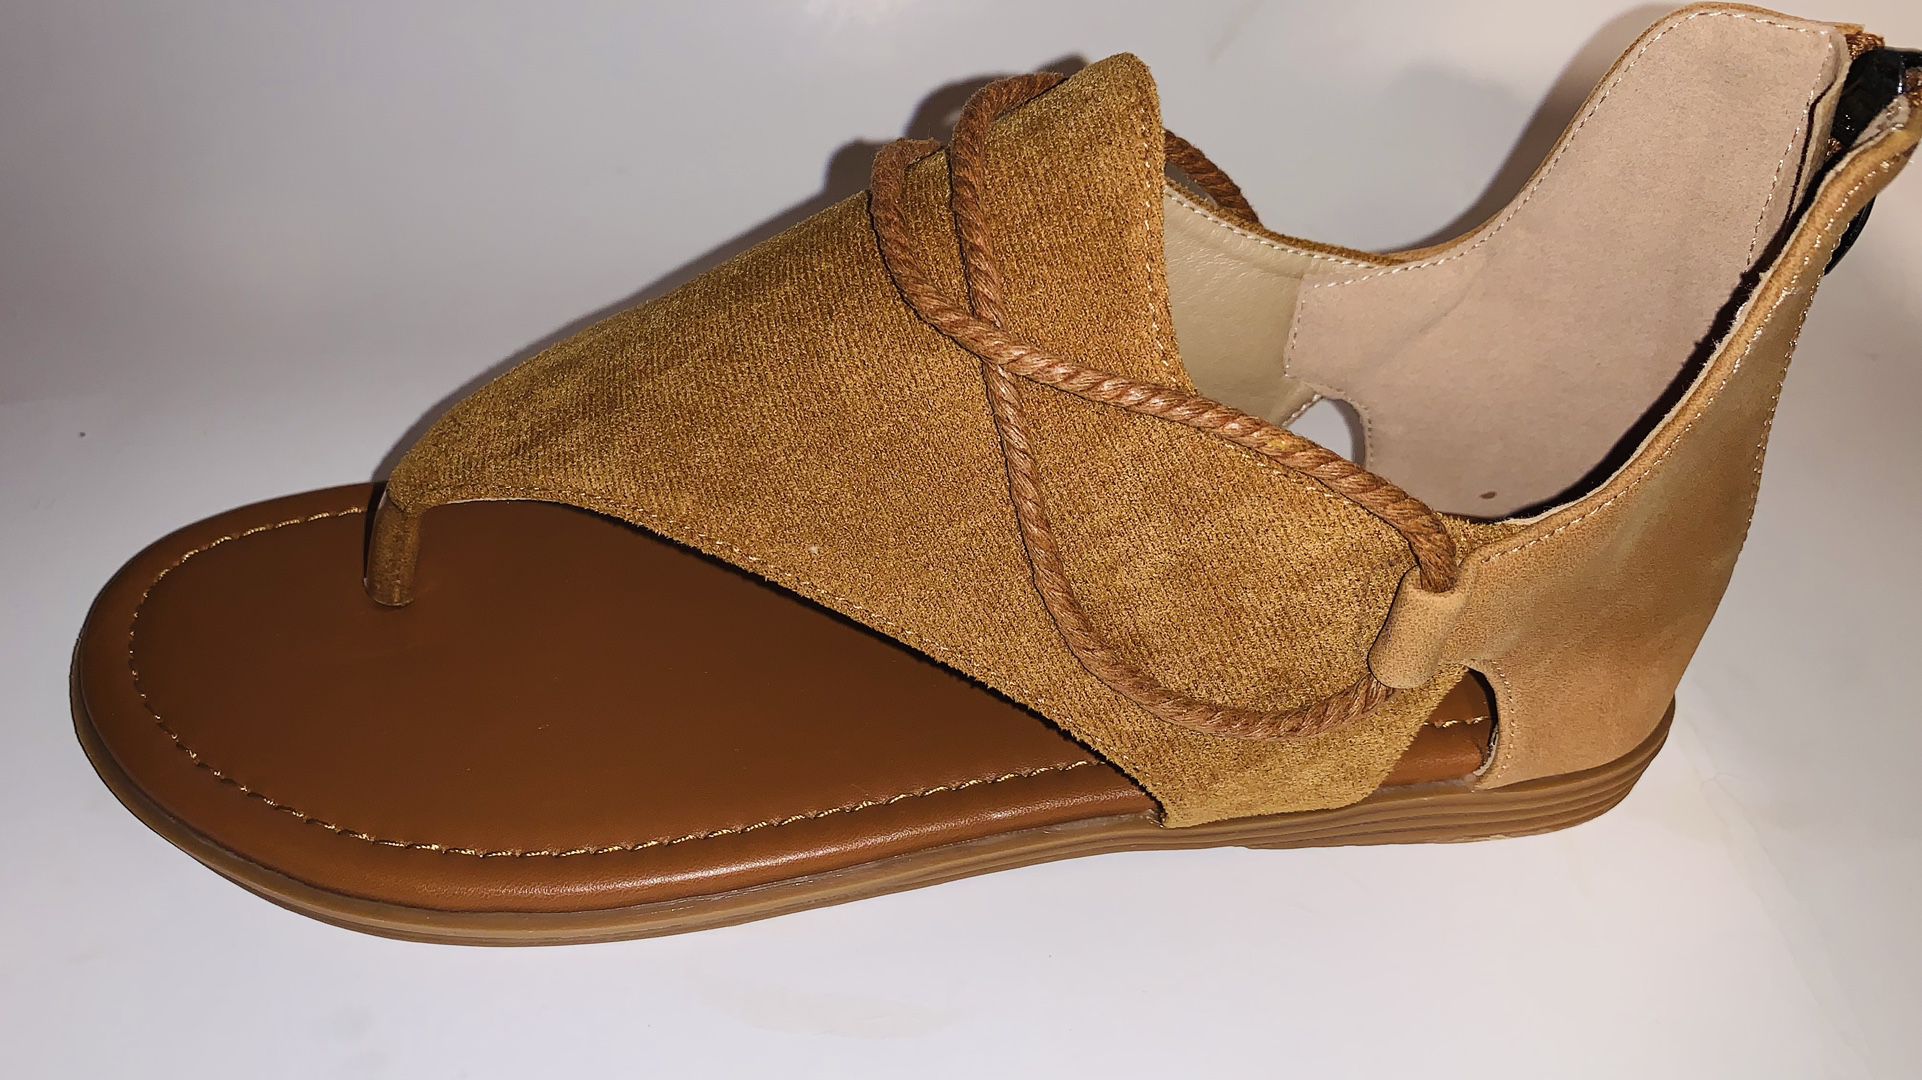 Tilocow Posh Gladiator Sandals For Women Comfort Flat Sandals Summer Shoes For Women Vintage Flip Flops